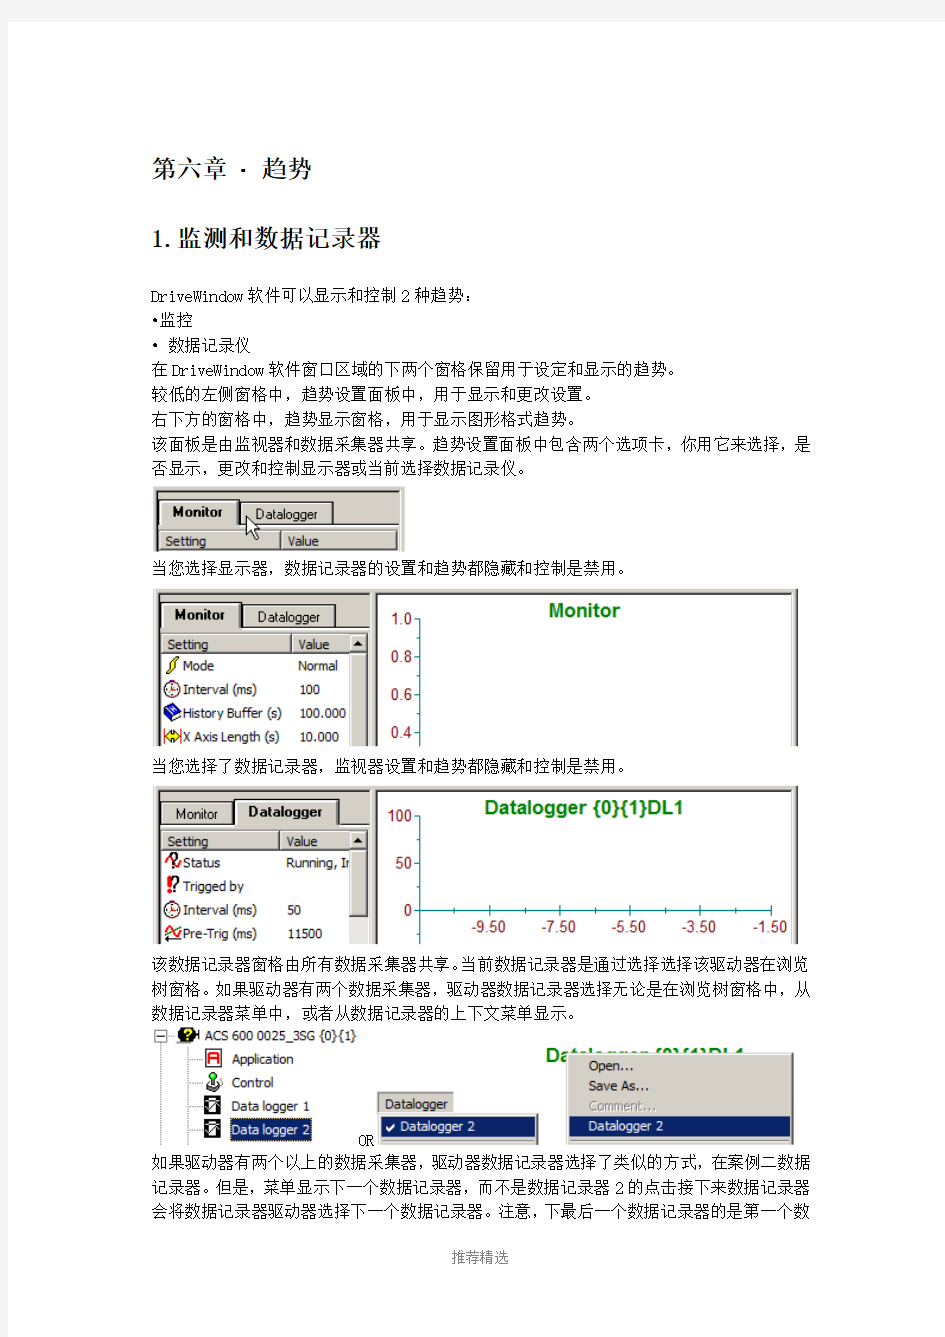 DriveWindow2用户手册6参考word